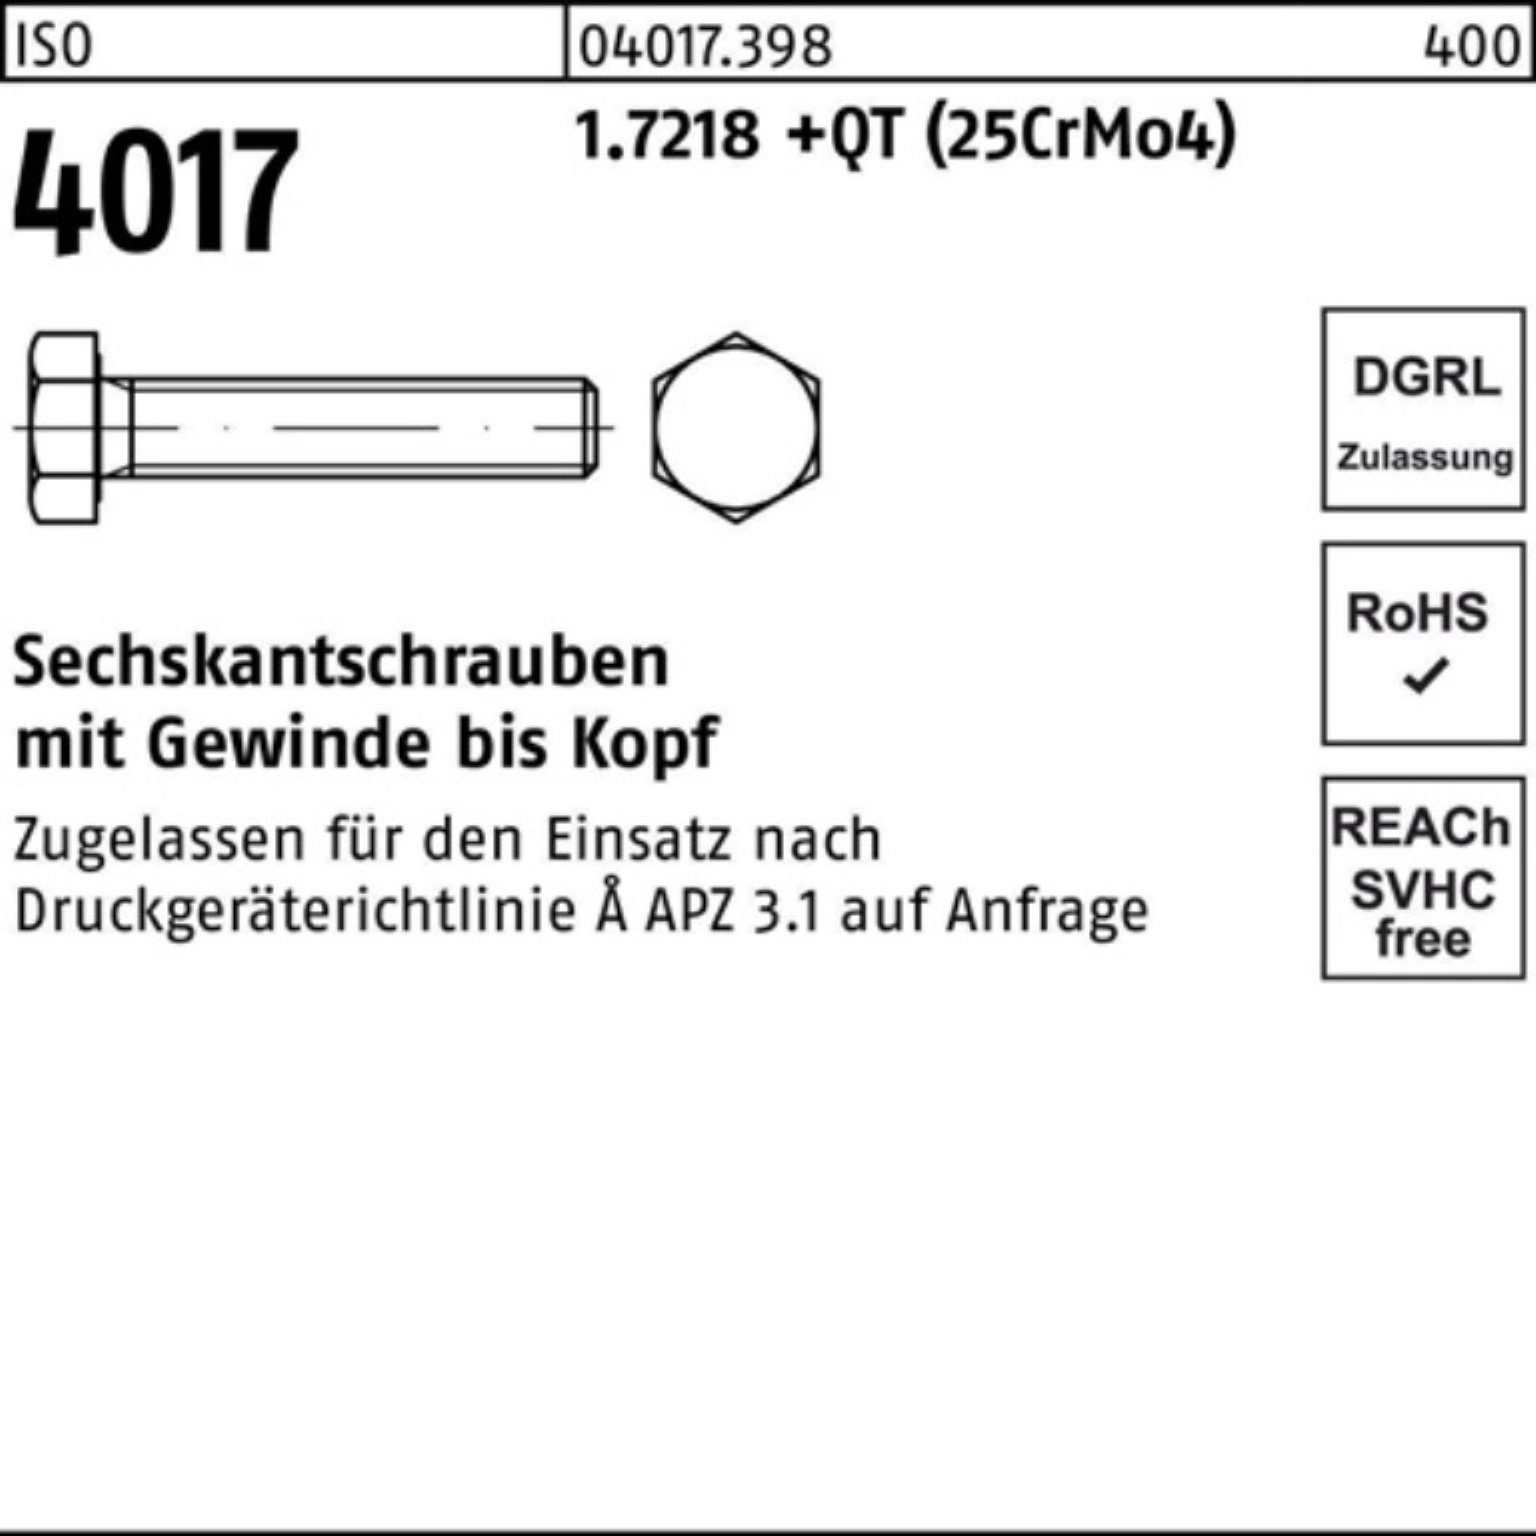 VG Pack (25CrMo4) Sechskantschraube 100er ISO Sechskantschraube 110 M24x 4017 1.7218 Bufab +QT